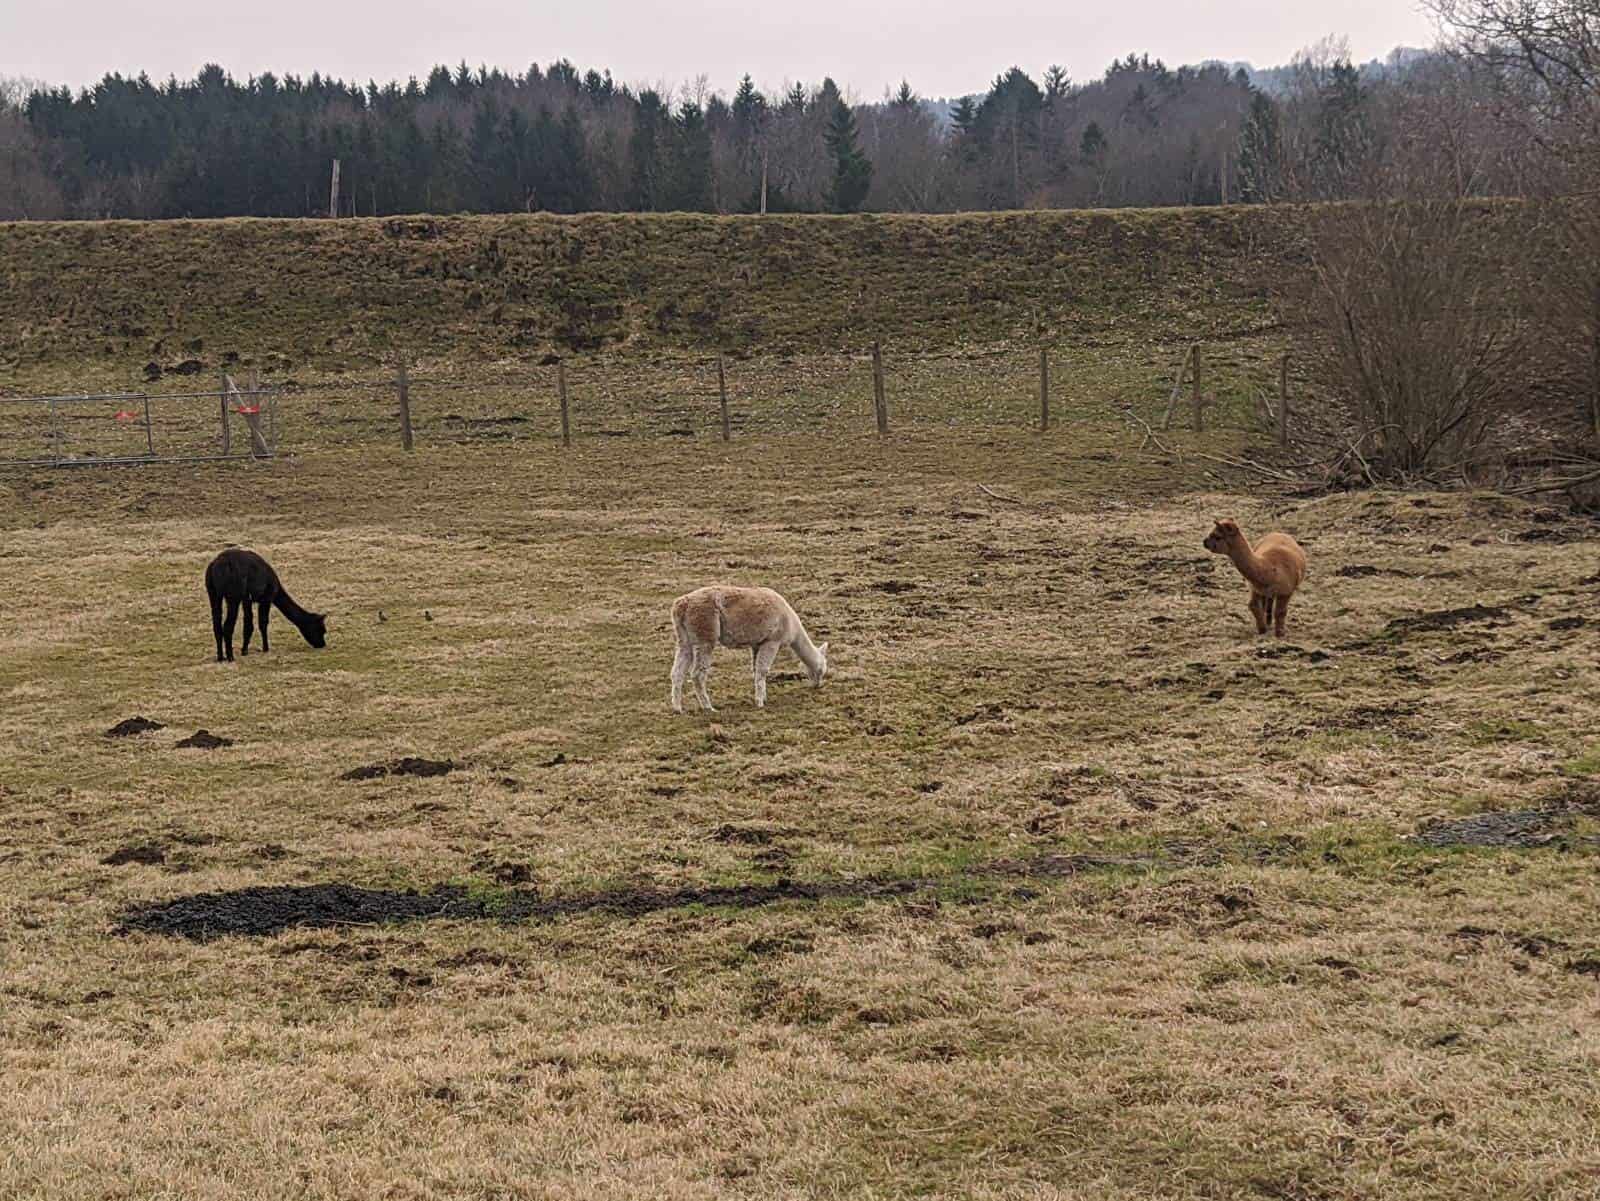 Ah, the native alpaca population!